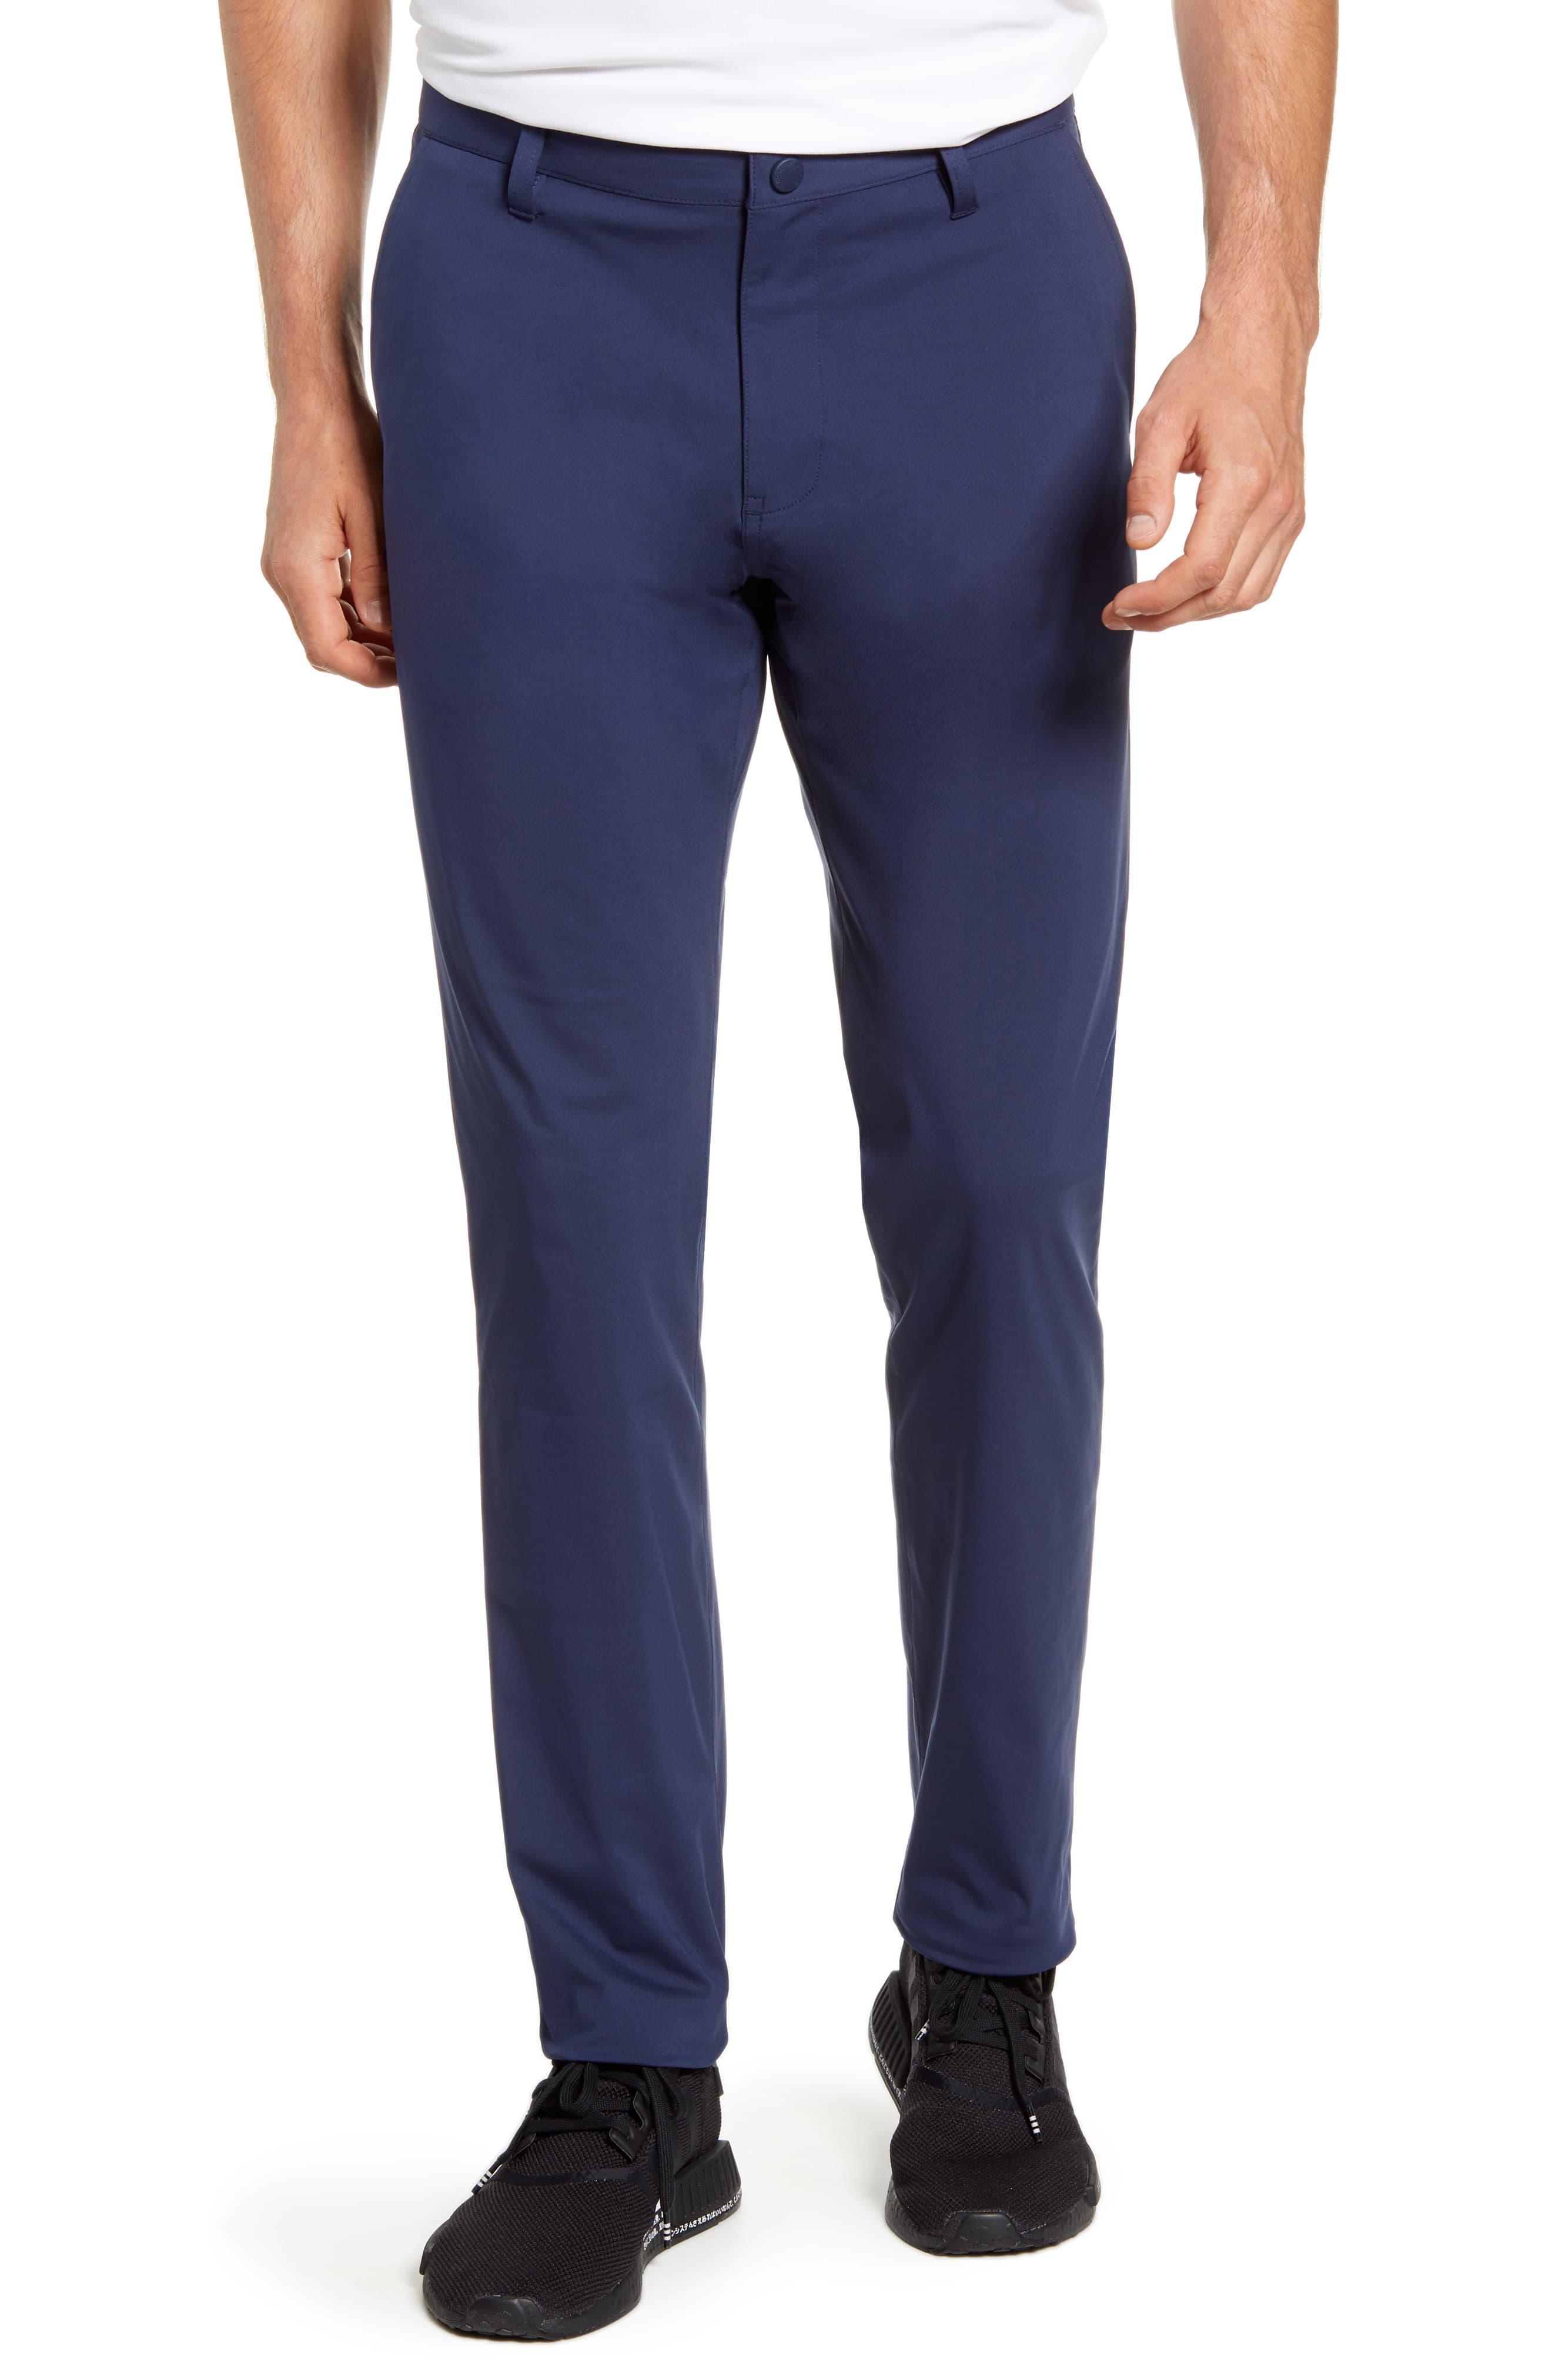 Rhone Commuter Slim Fit Pants in Navy (Blue) for Men - Lyst